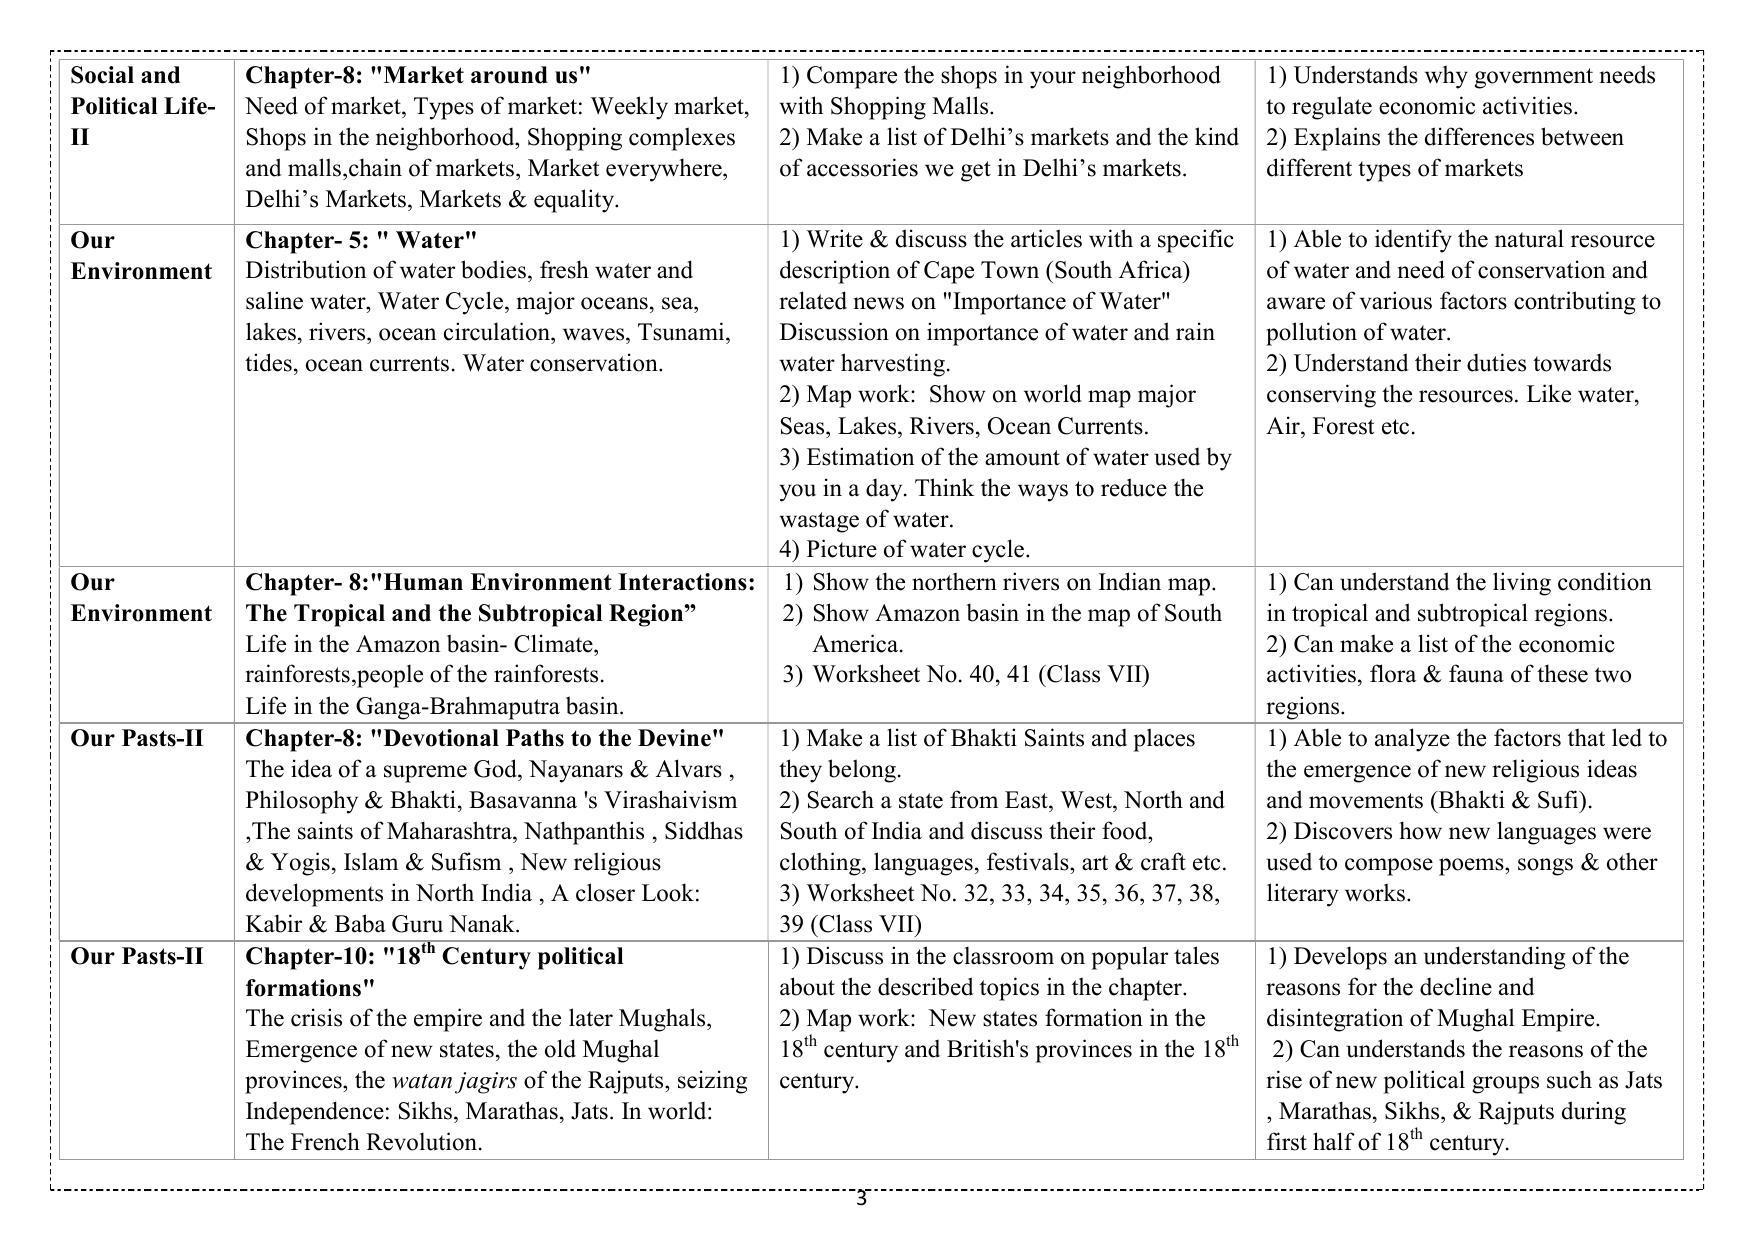 Edudel Class 7(L-2) Social Science (English Medium) Syllabus - Page 3